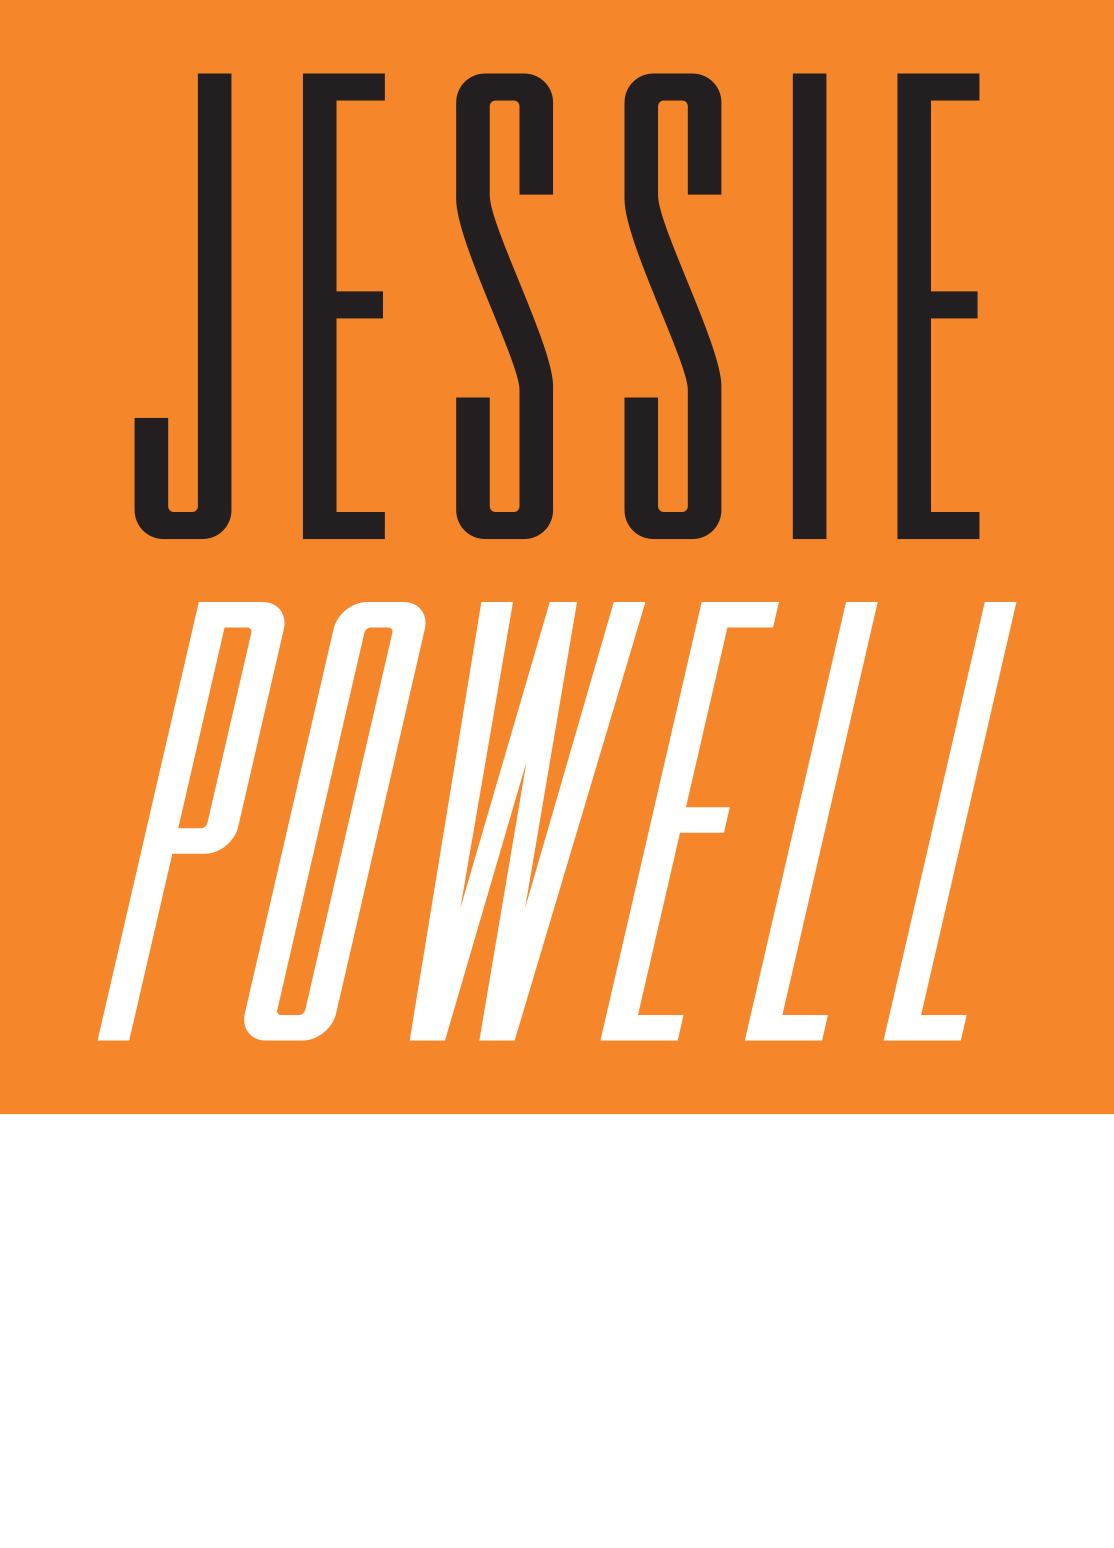 Jessie Powell Music Ltd